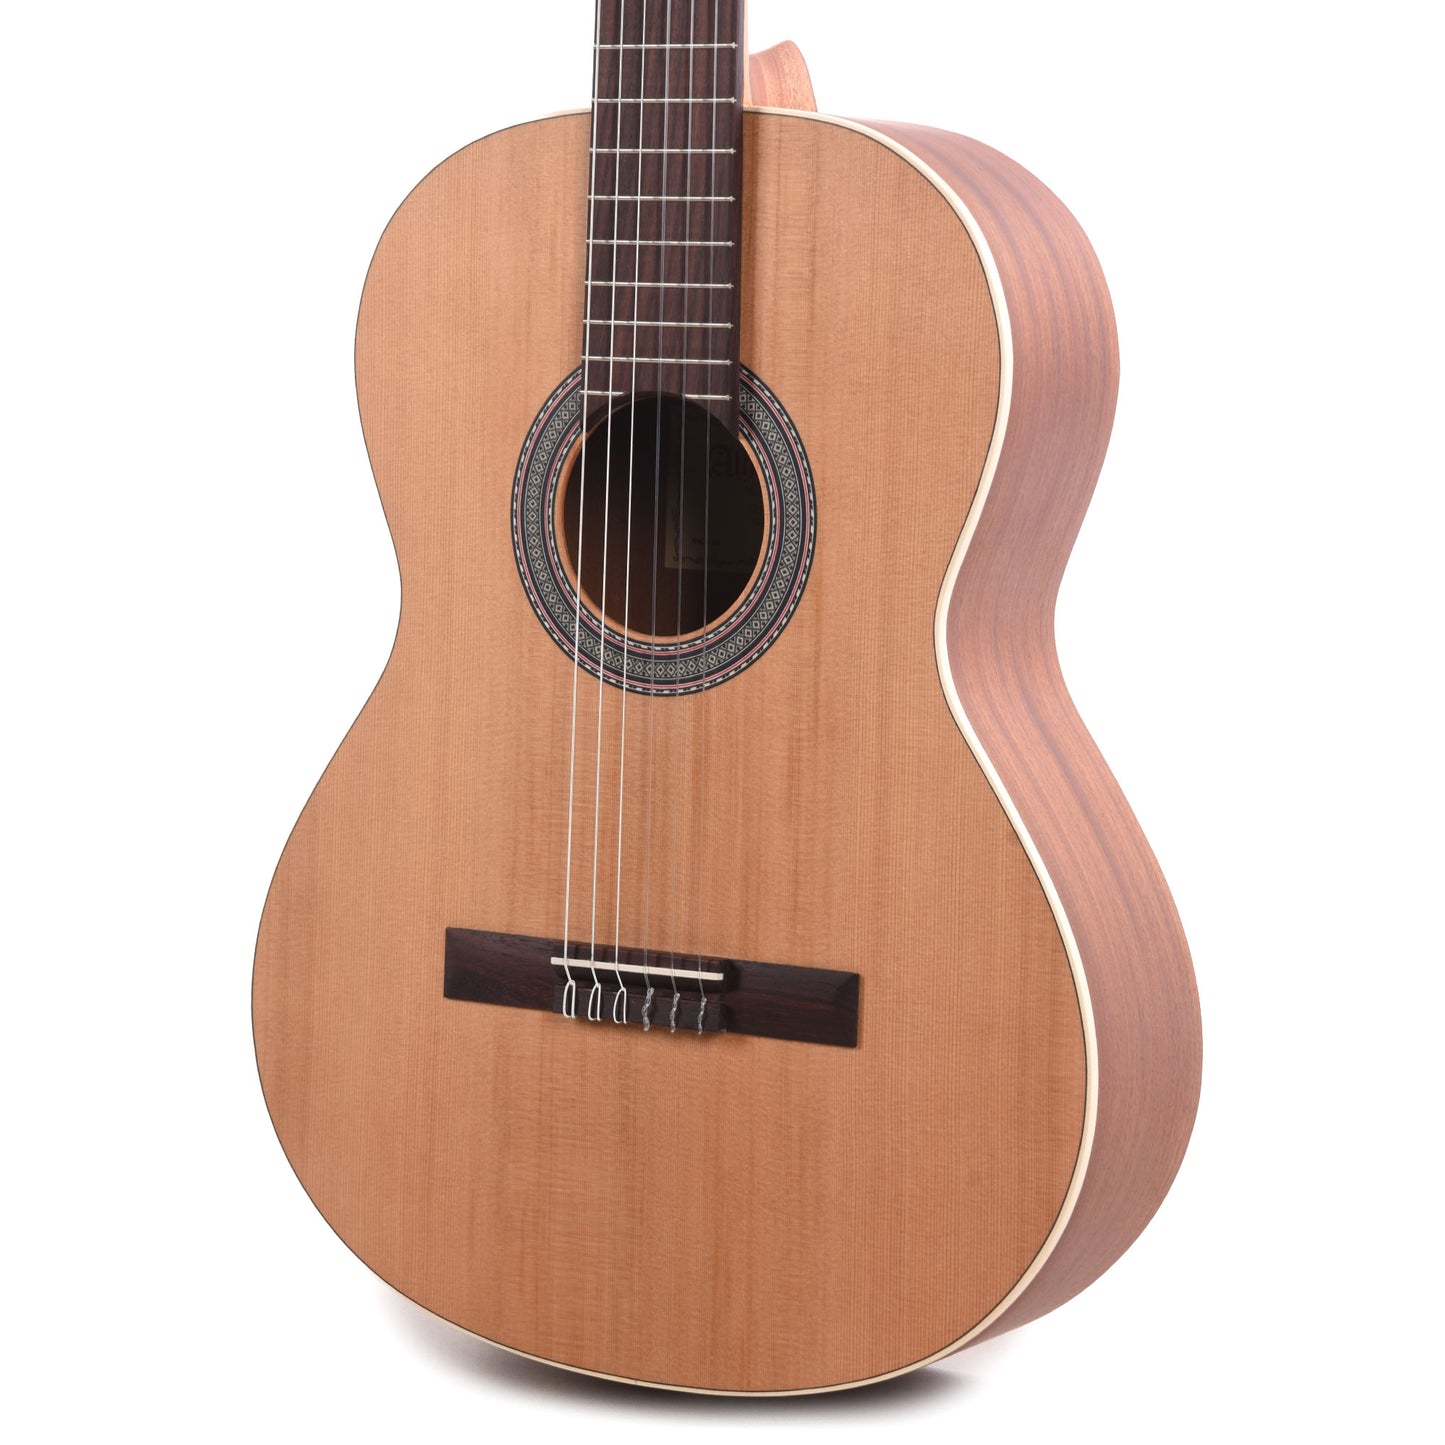 Alhambra 1OP Studio Classical Nylon String Acoustic Guitar Natural